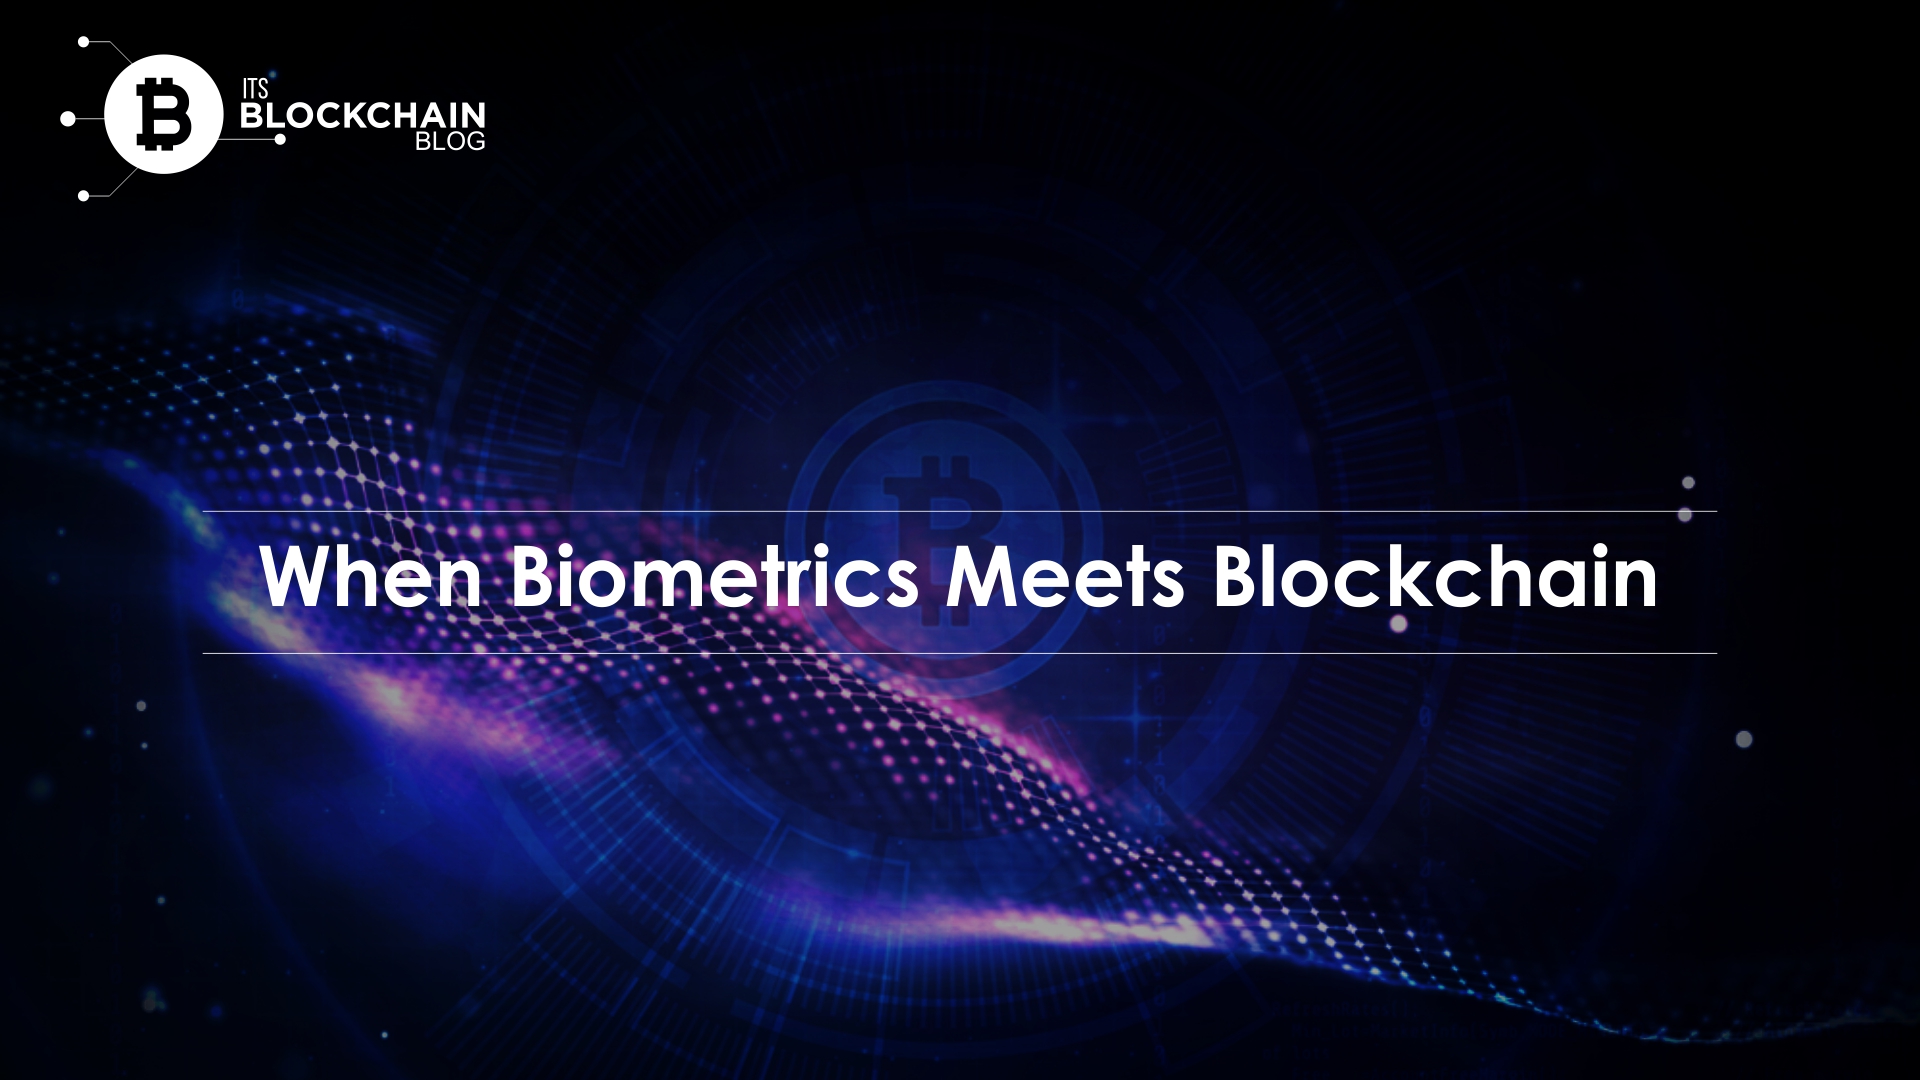 When biometrics meets blockchain | ItsBlockchain